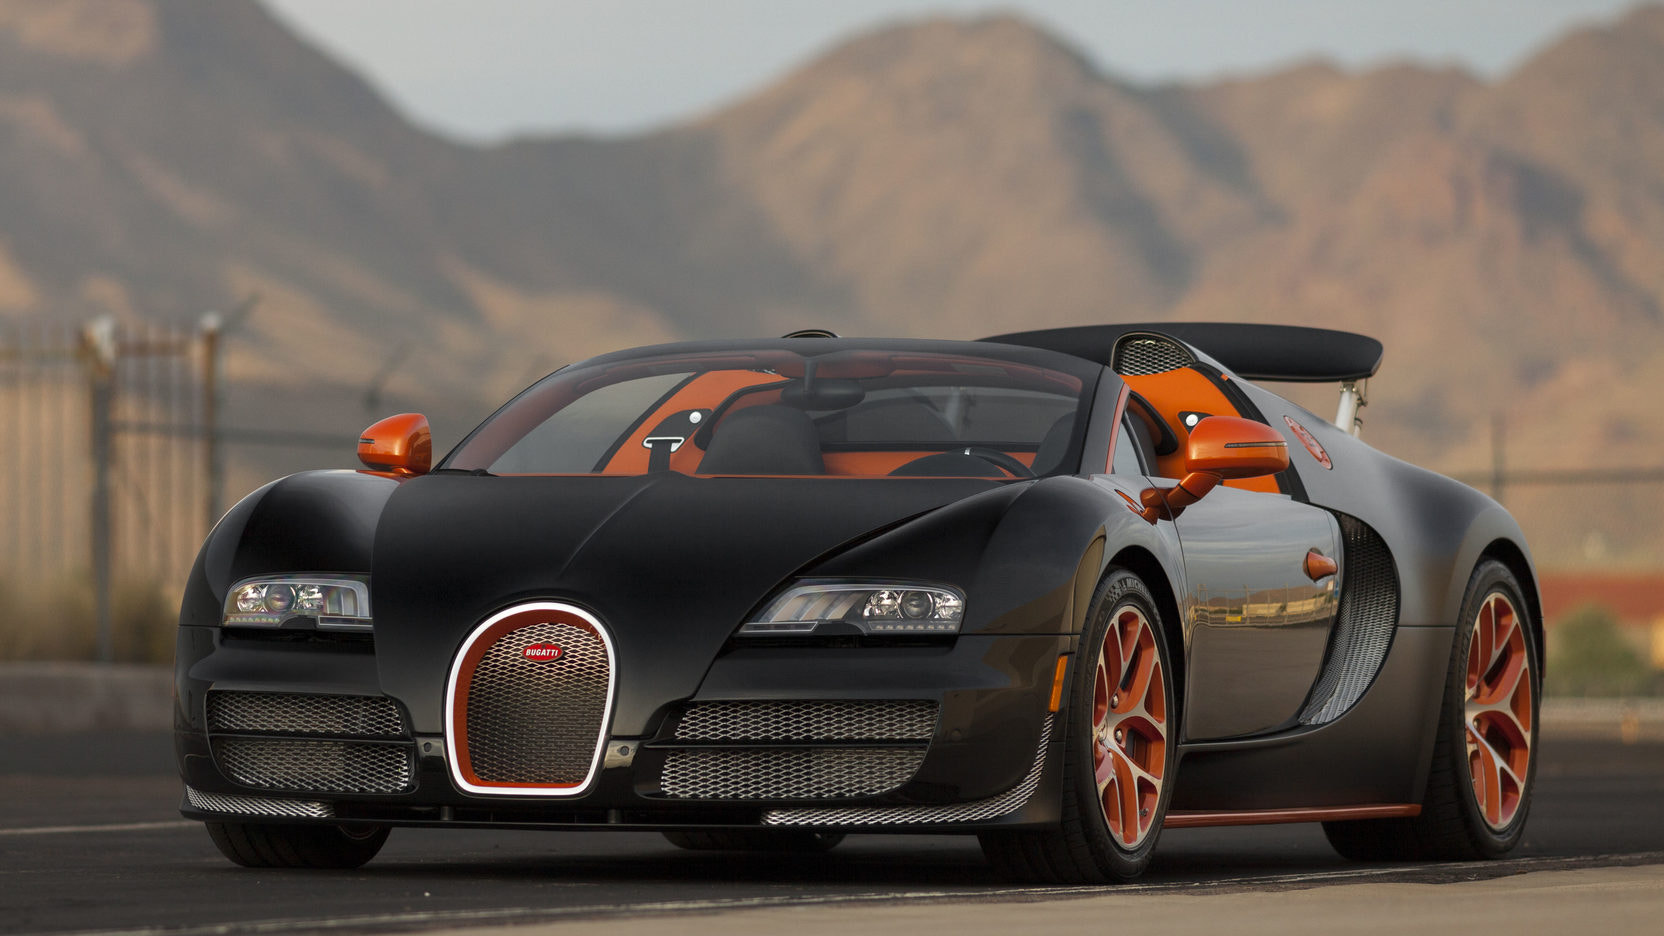 Bugatti Veyron Super Sport Rental in Dubai